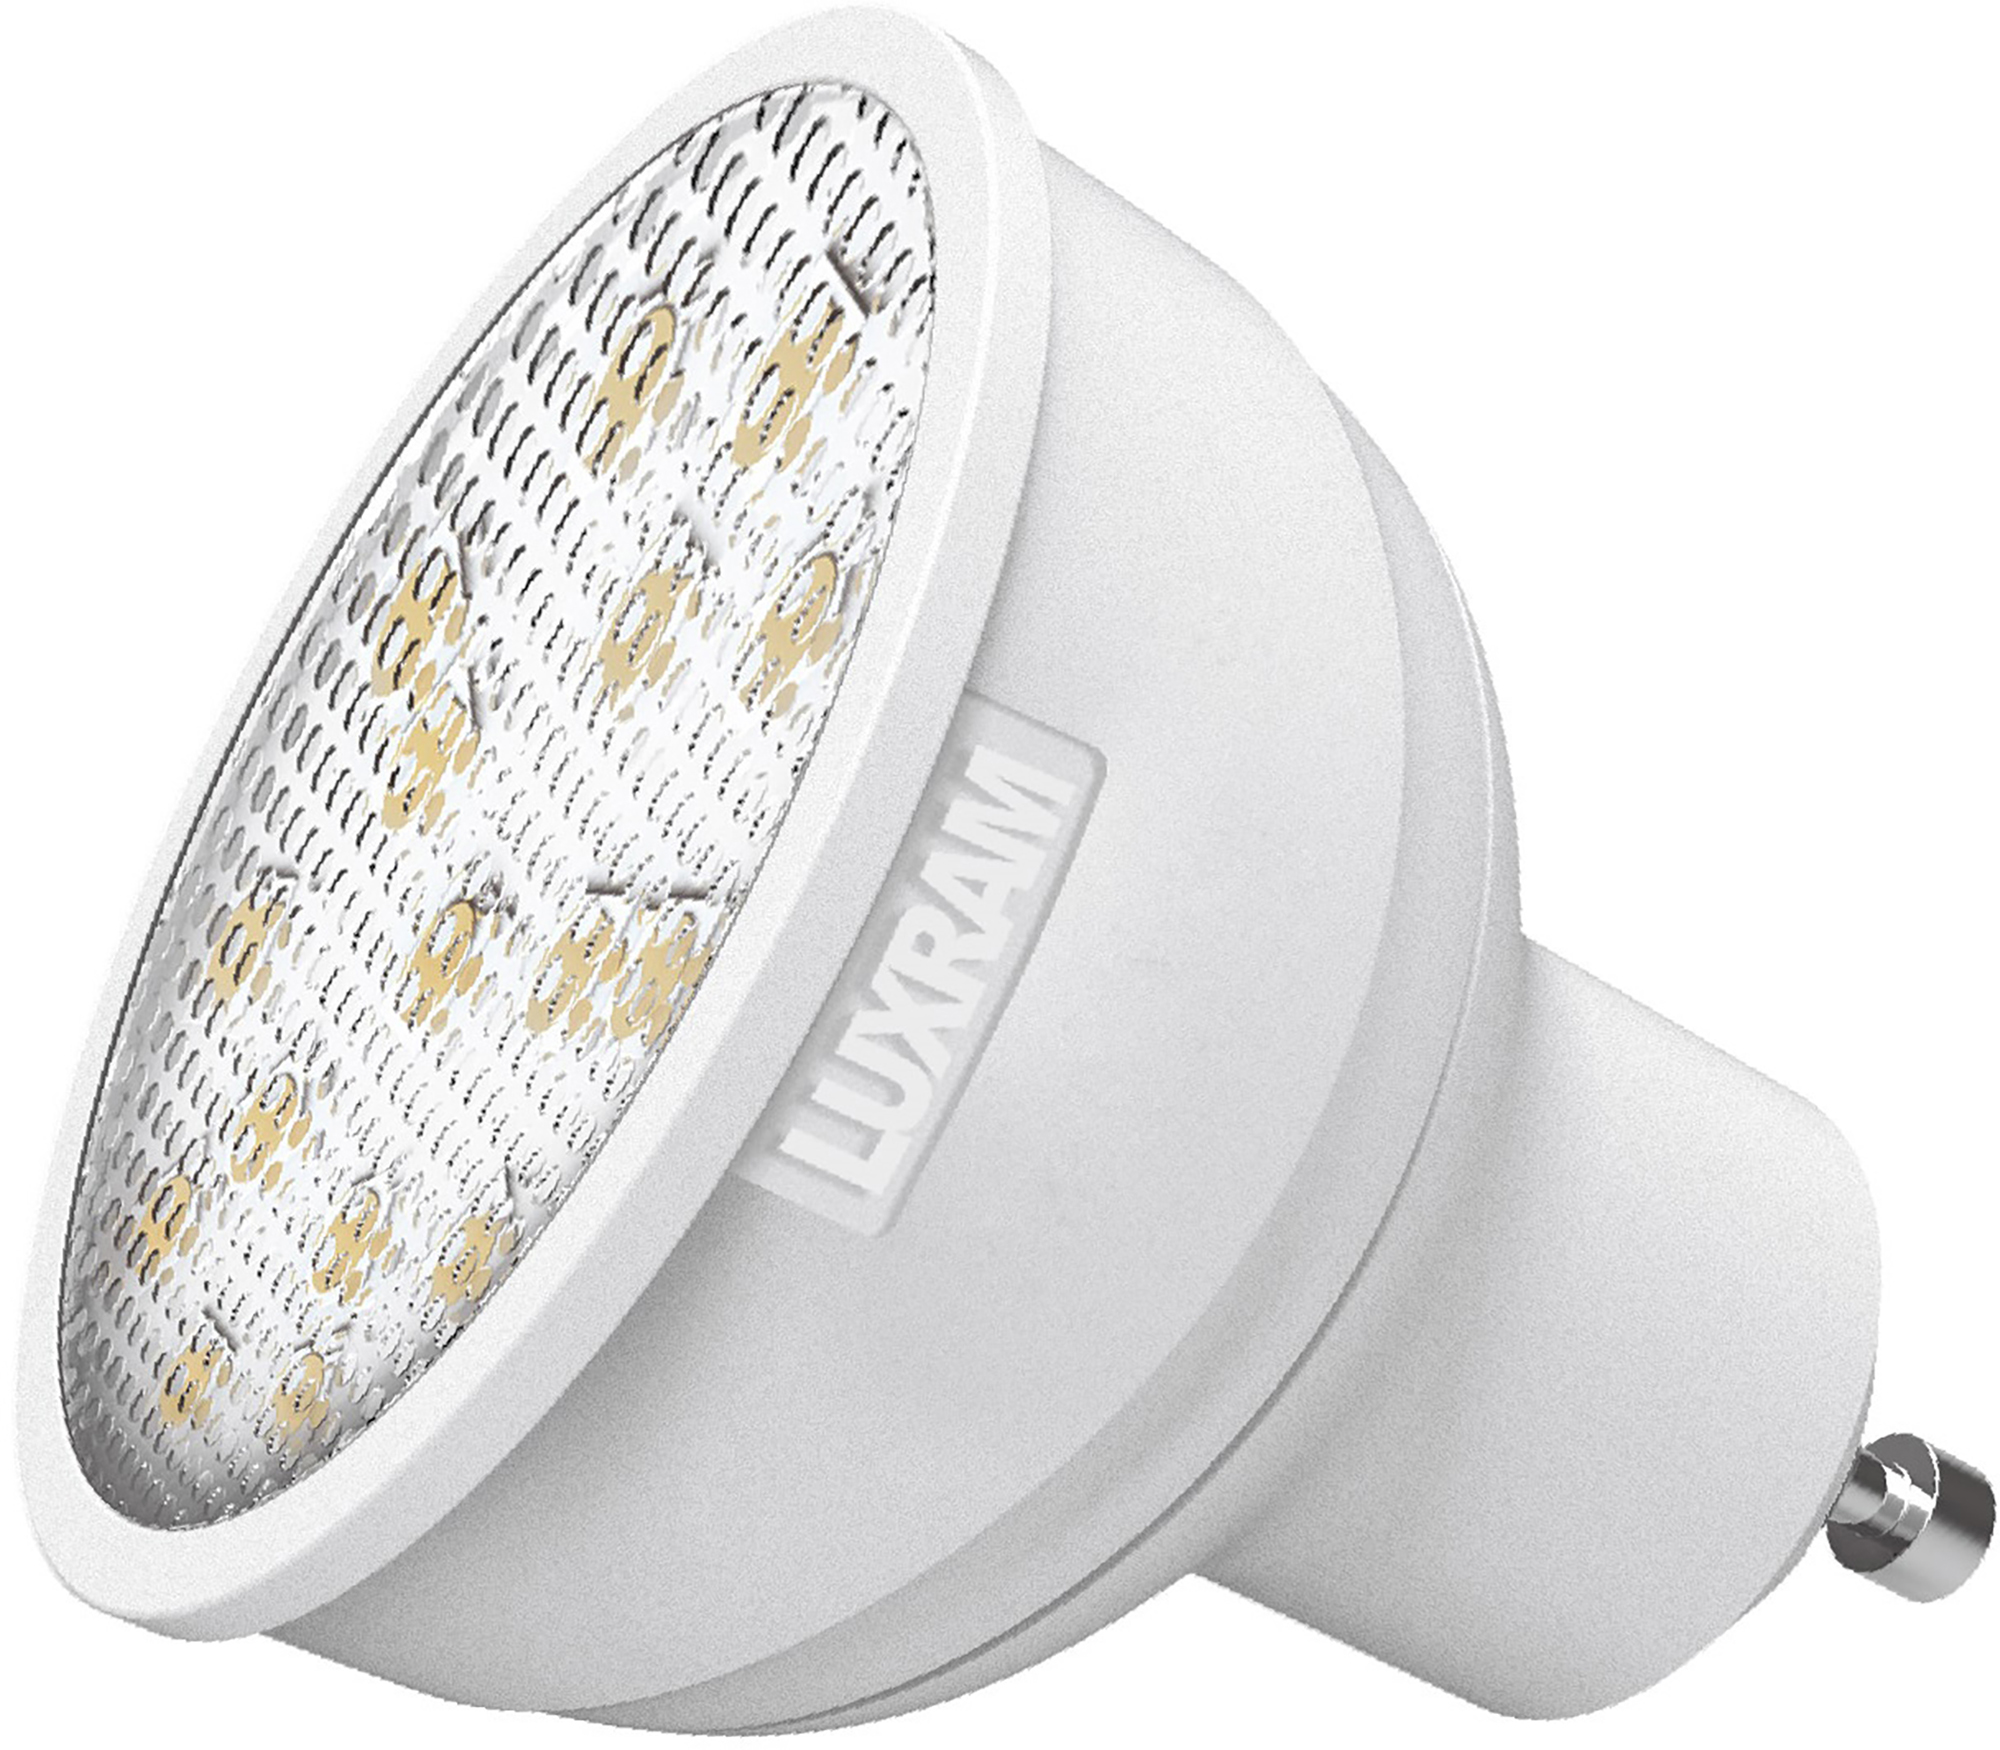 Curvodo LED Lamps Luxram Spot Lamps